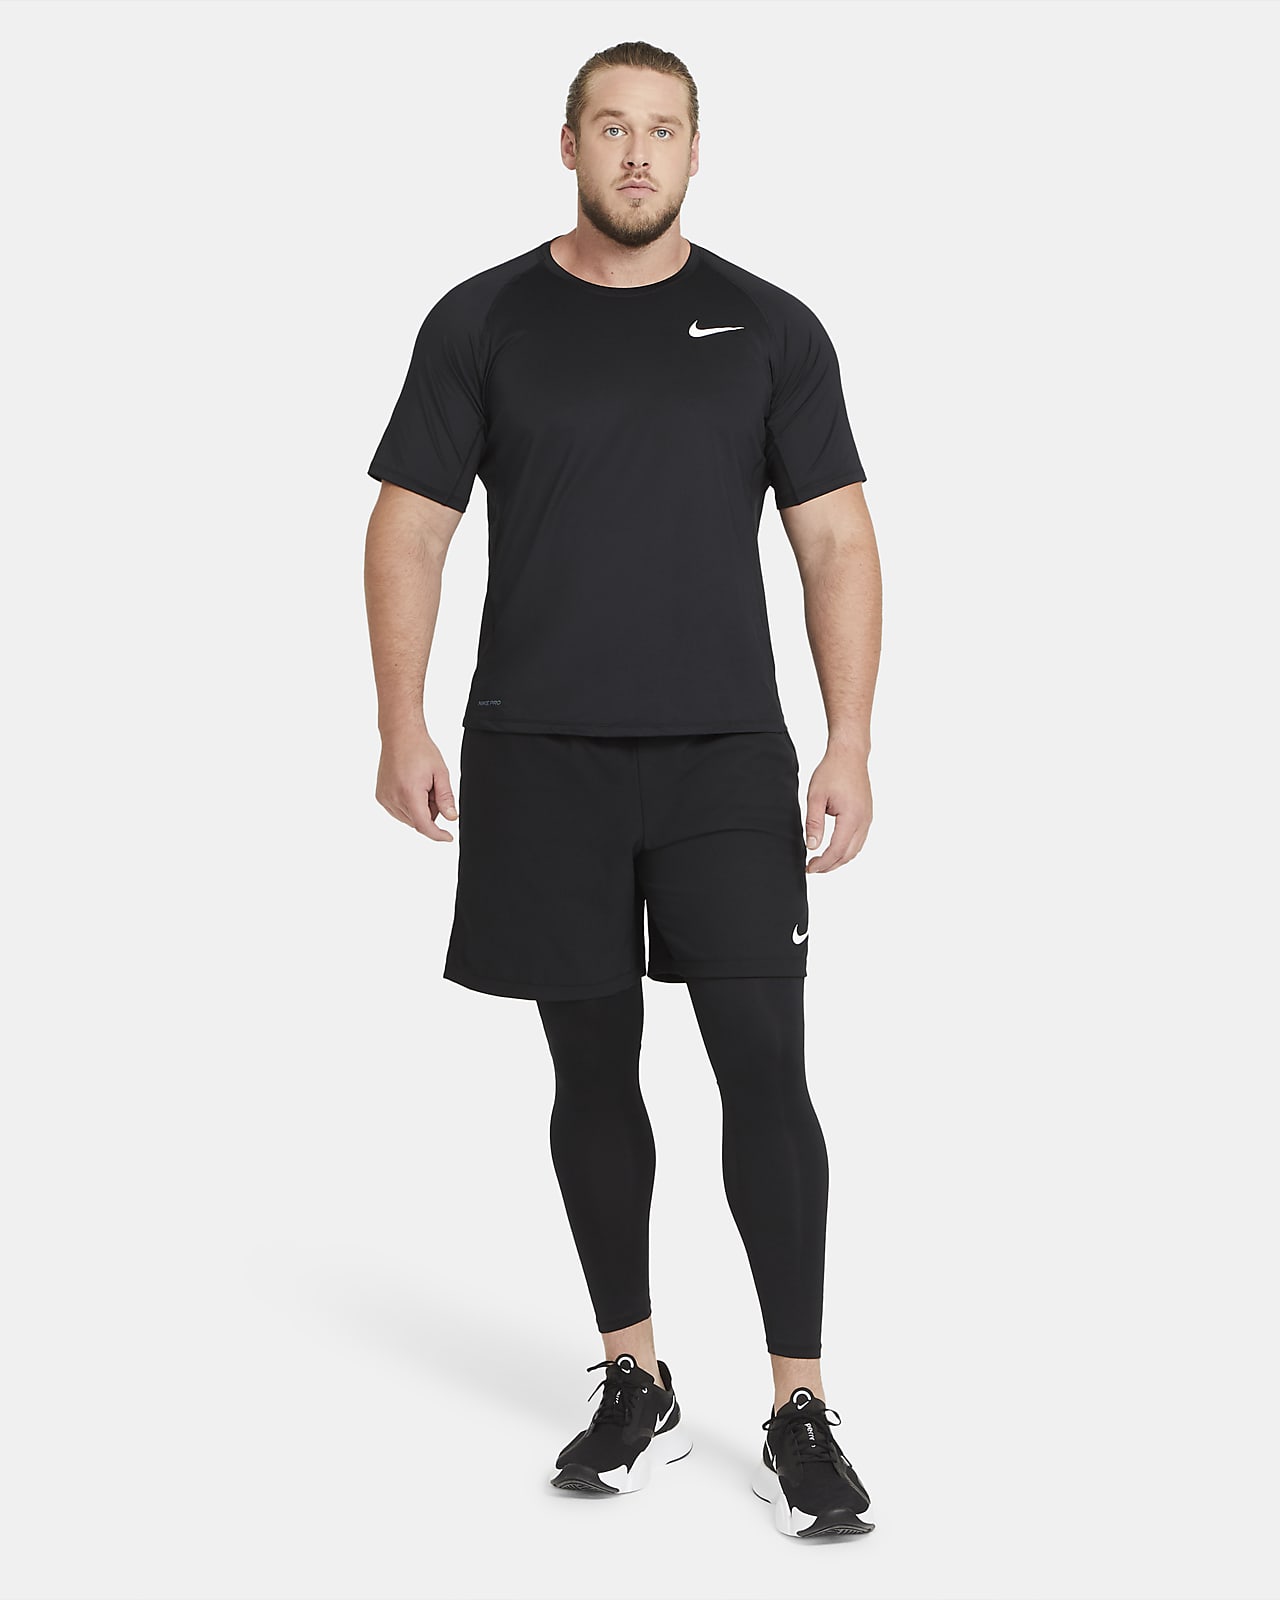 NIKE PRO 緊身長束褲(BV5642-010黑/灰配色) 籃球跑步吸濕排汗運動內搭